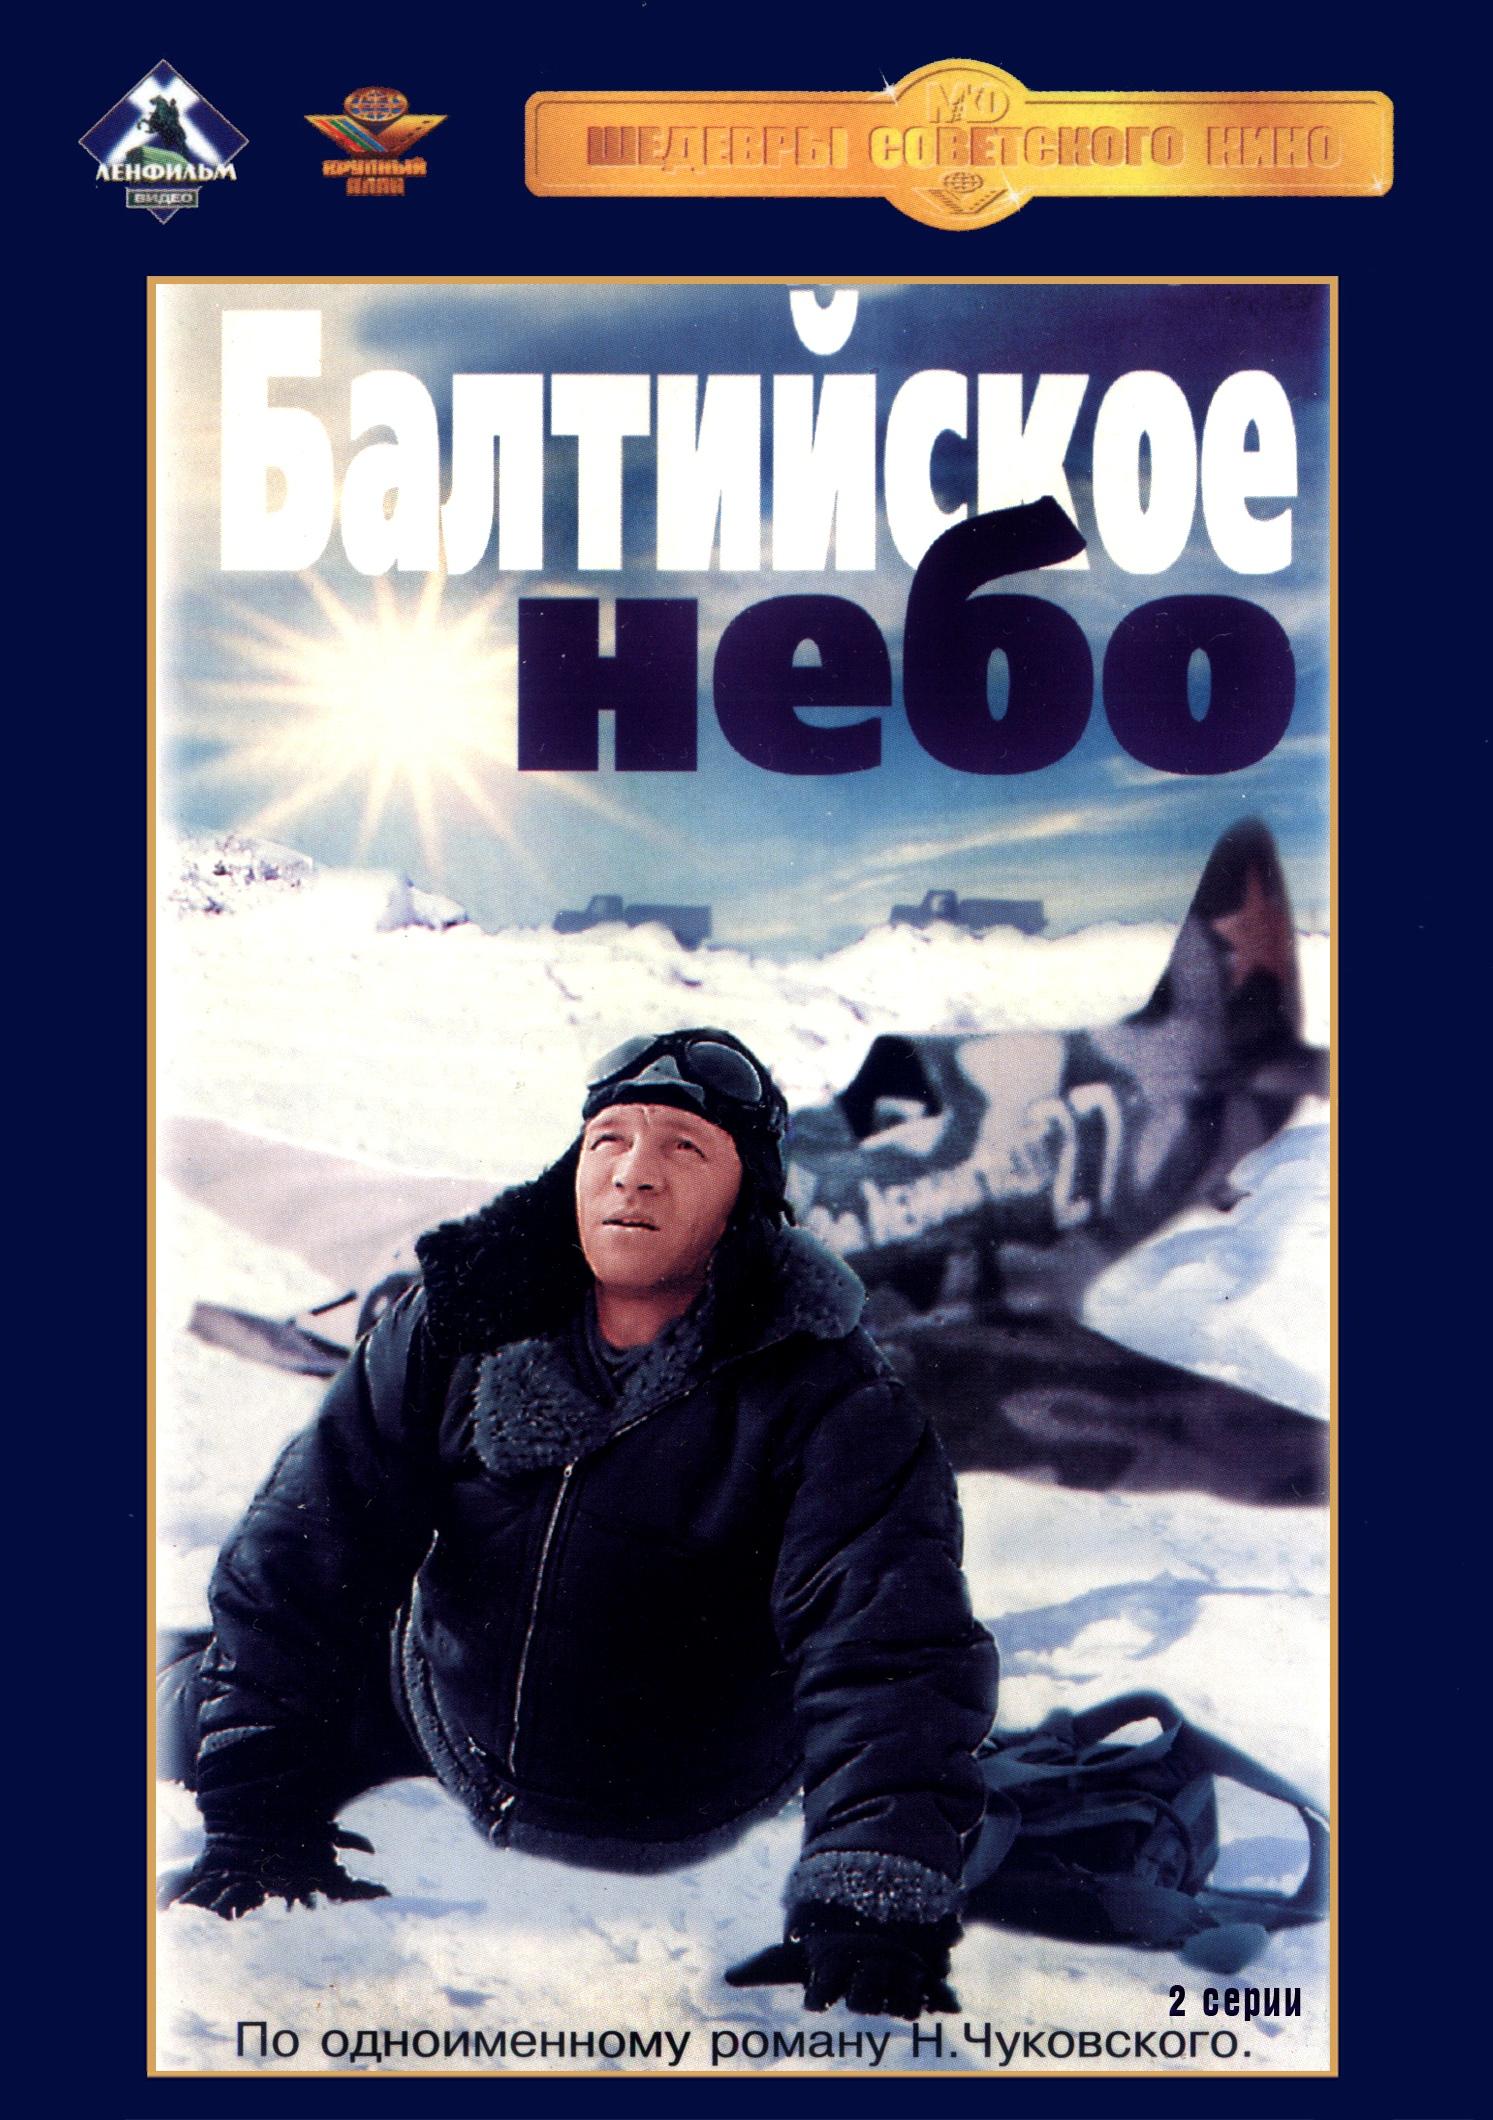 Постер фильма Балтийское небо | Baltiyskoe nebo